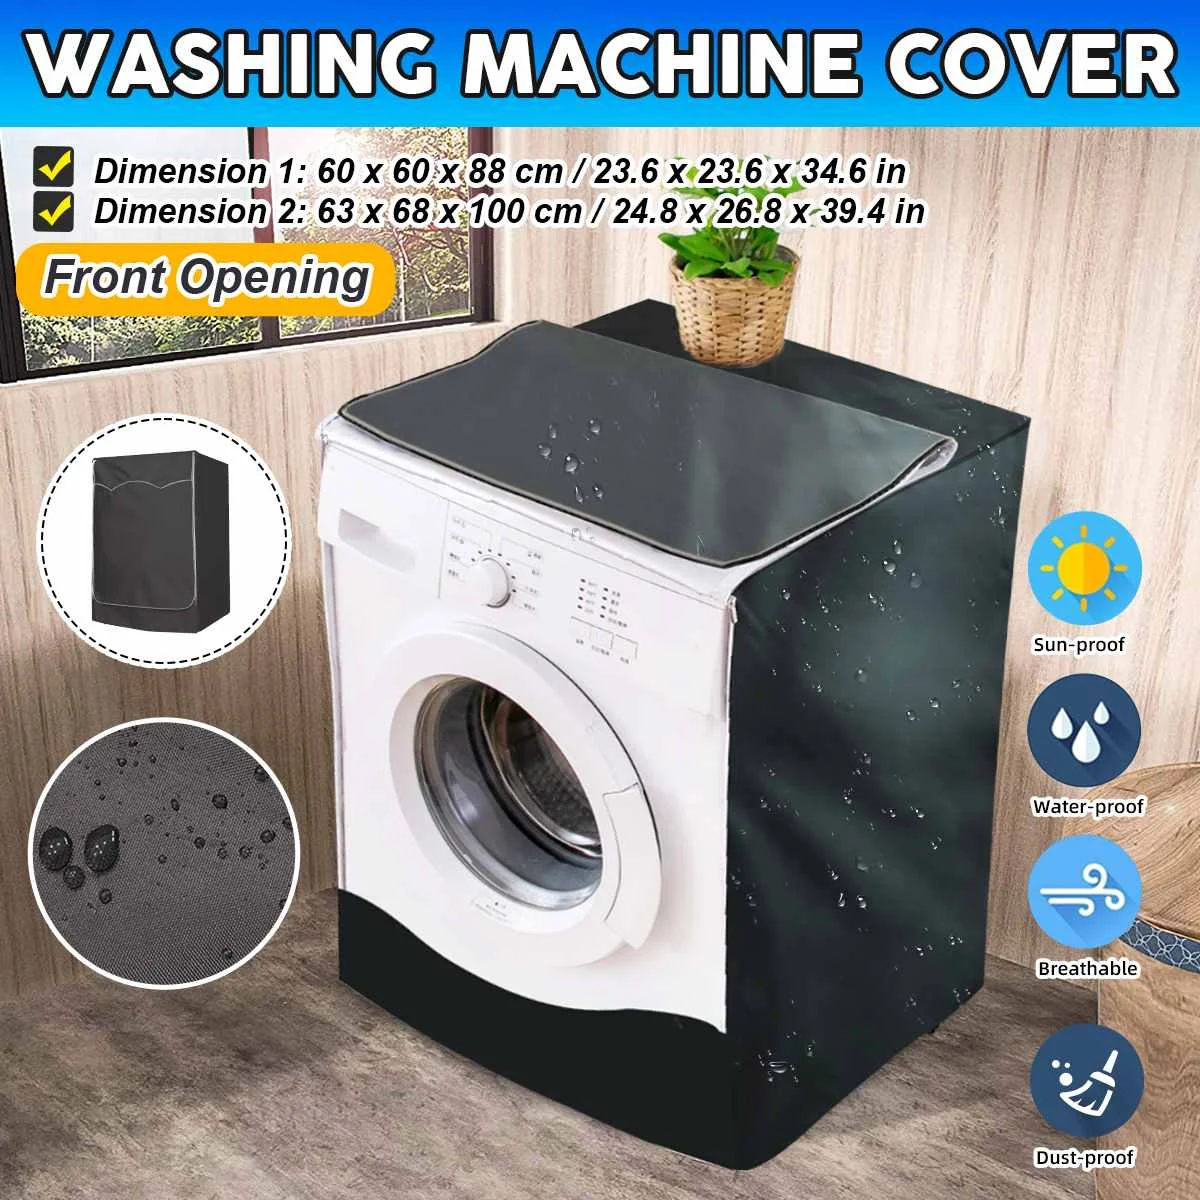 Washing Machine CoverDustproof Waterproof SunproofLaundry Dryer Protector 